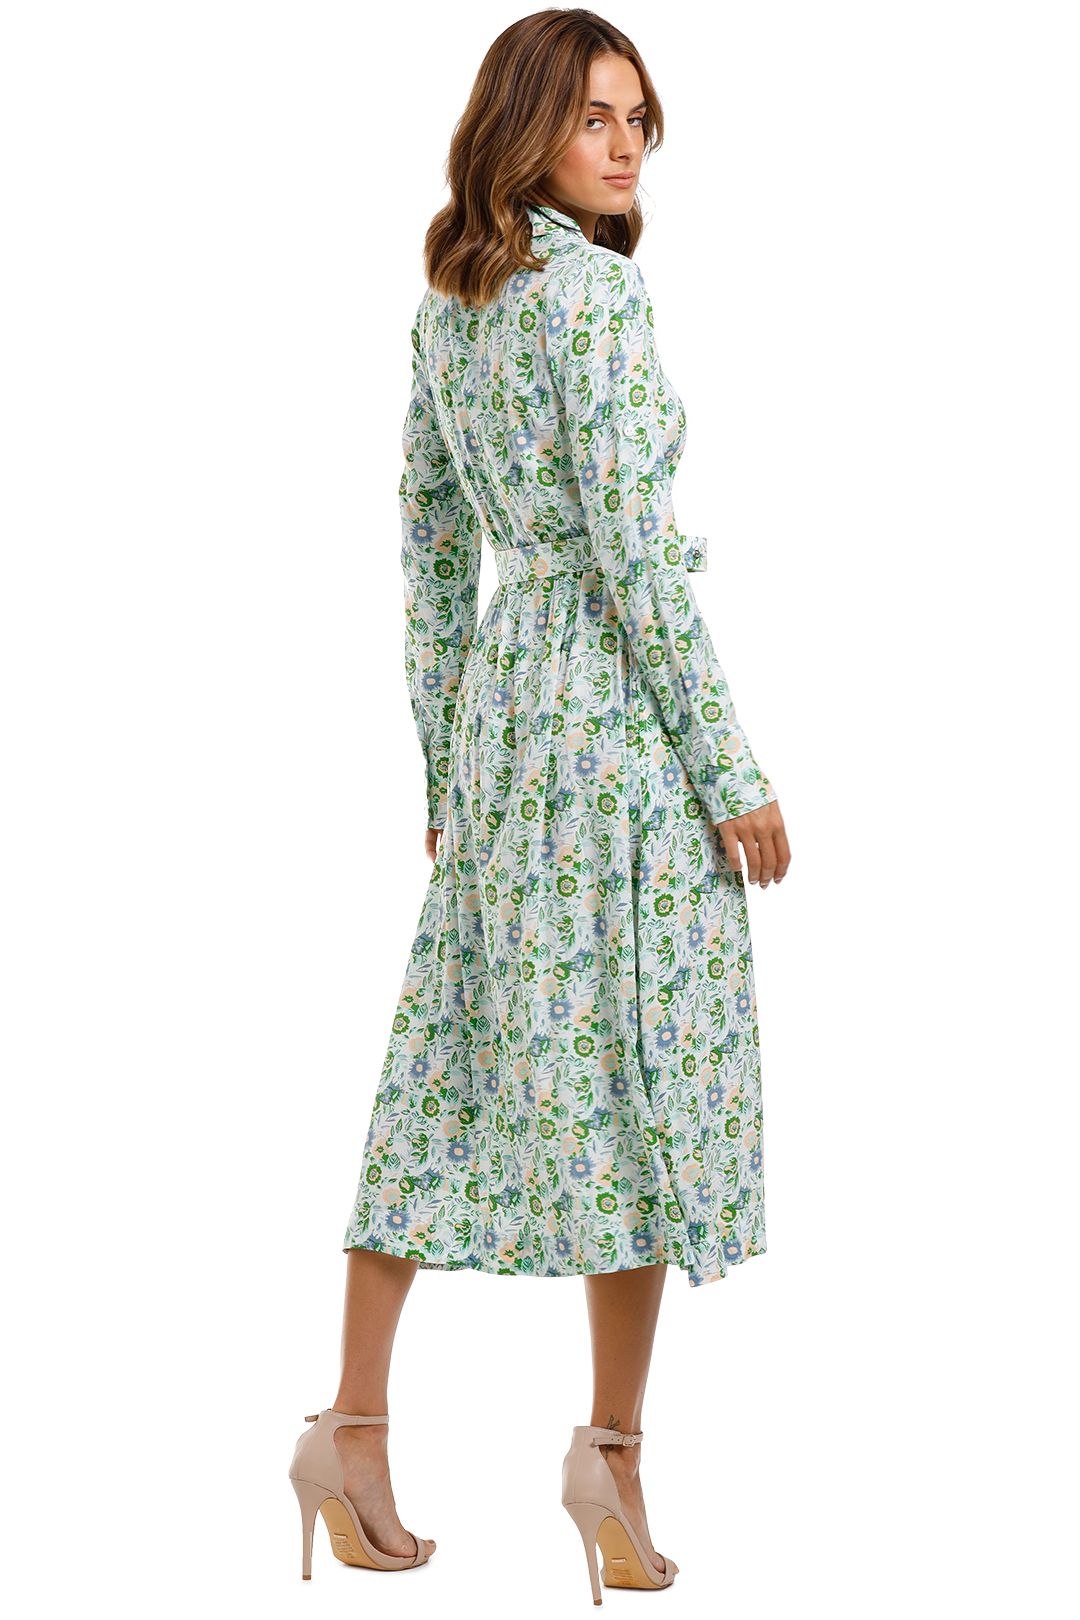 SWF Long Sleeve Shirt Dress green floral print